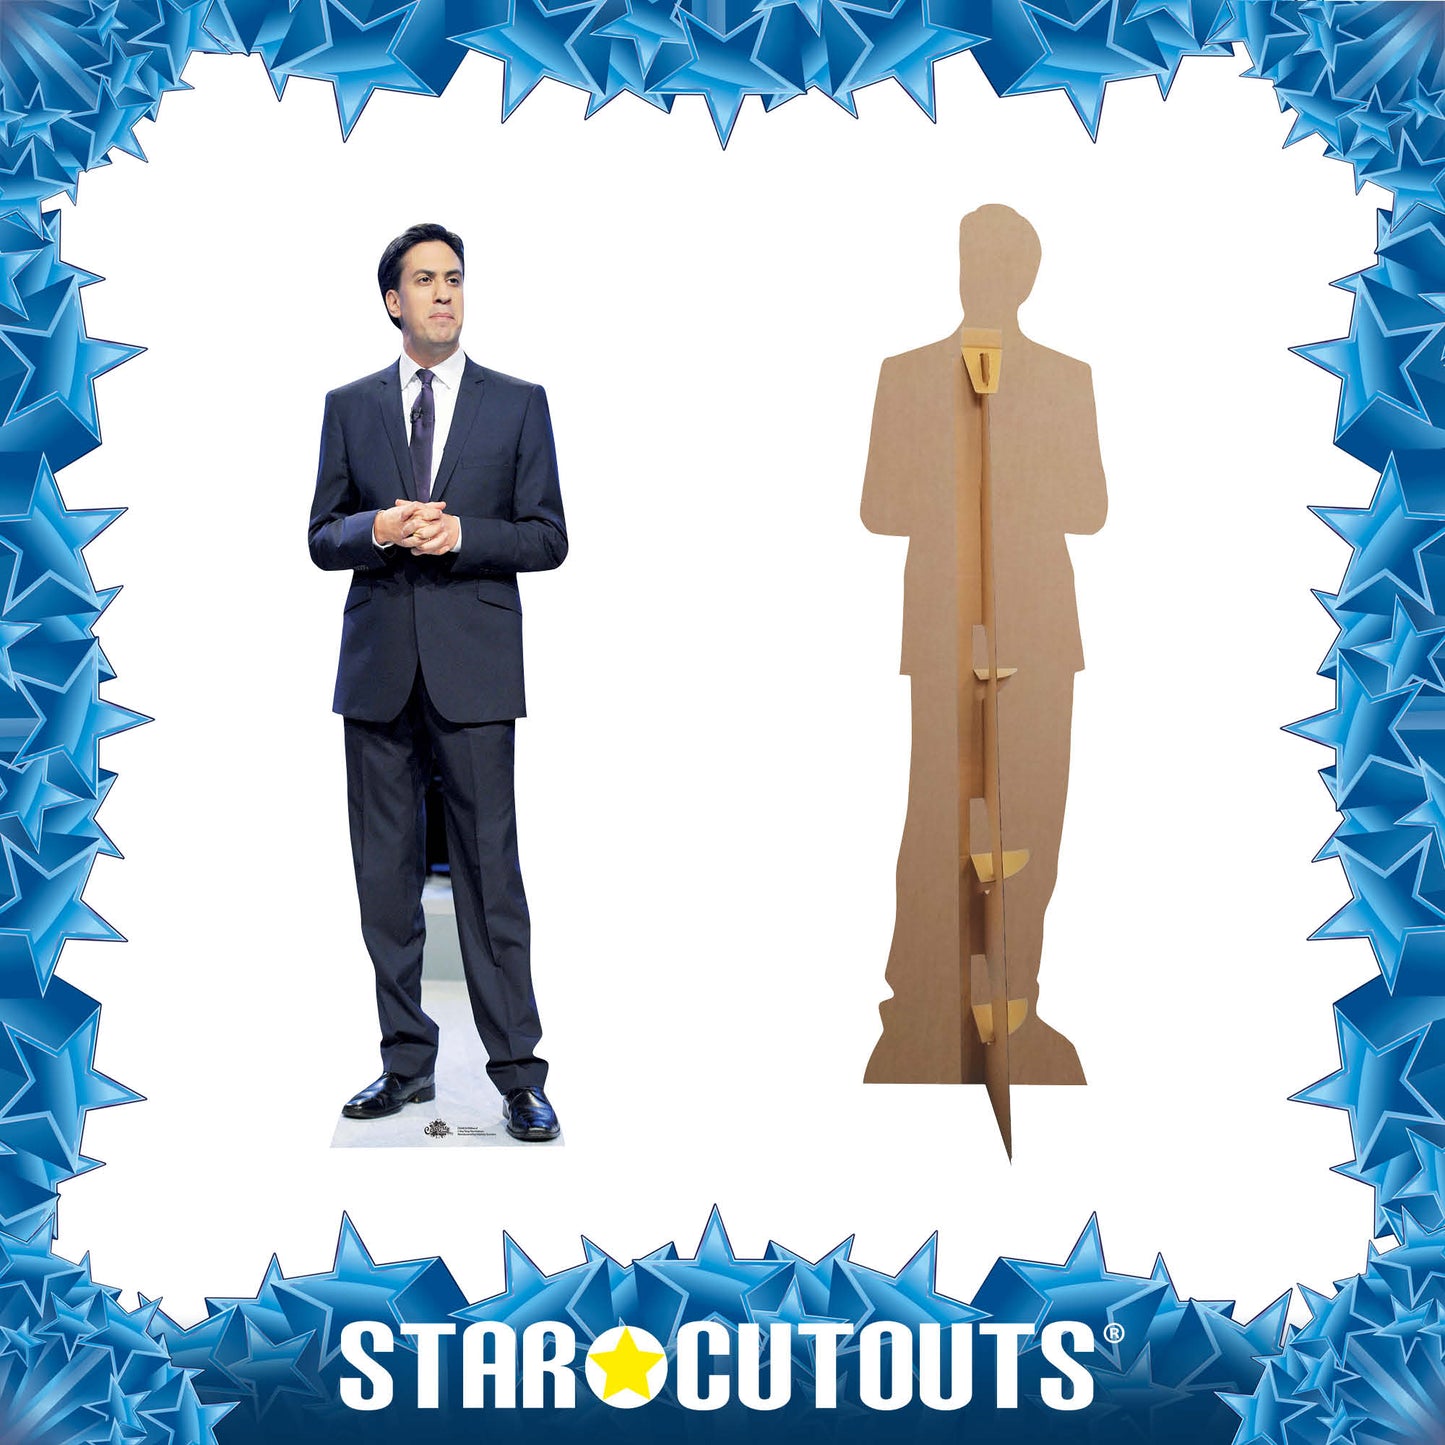 Ed Miliband Cardboard Cutout Politician